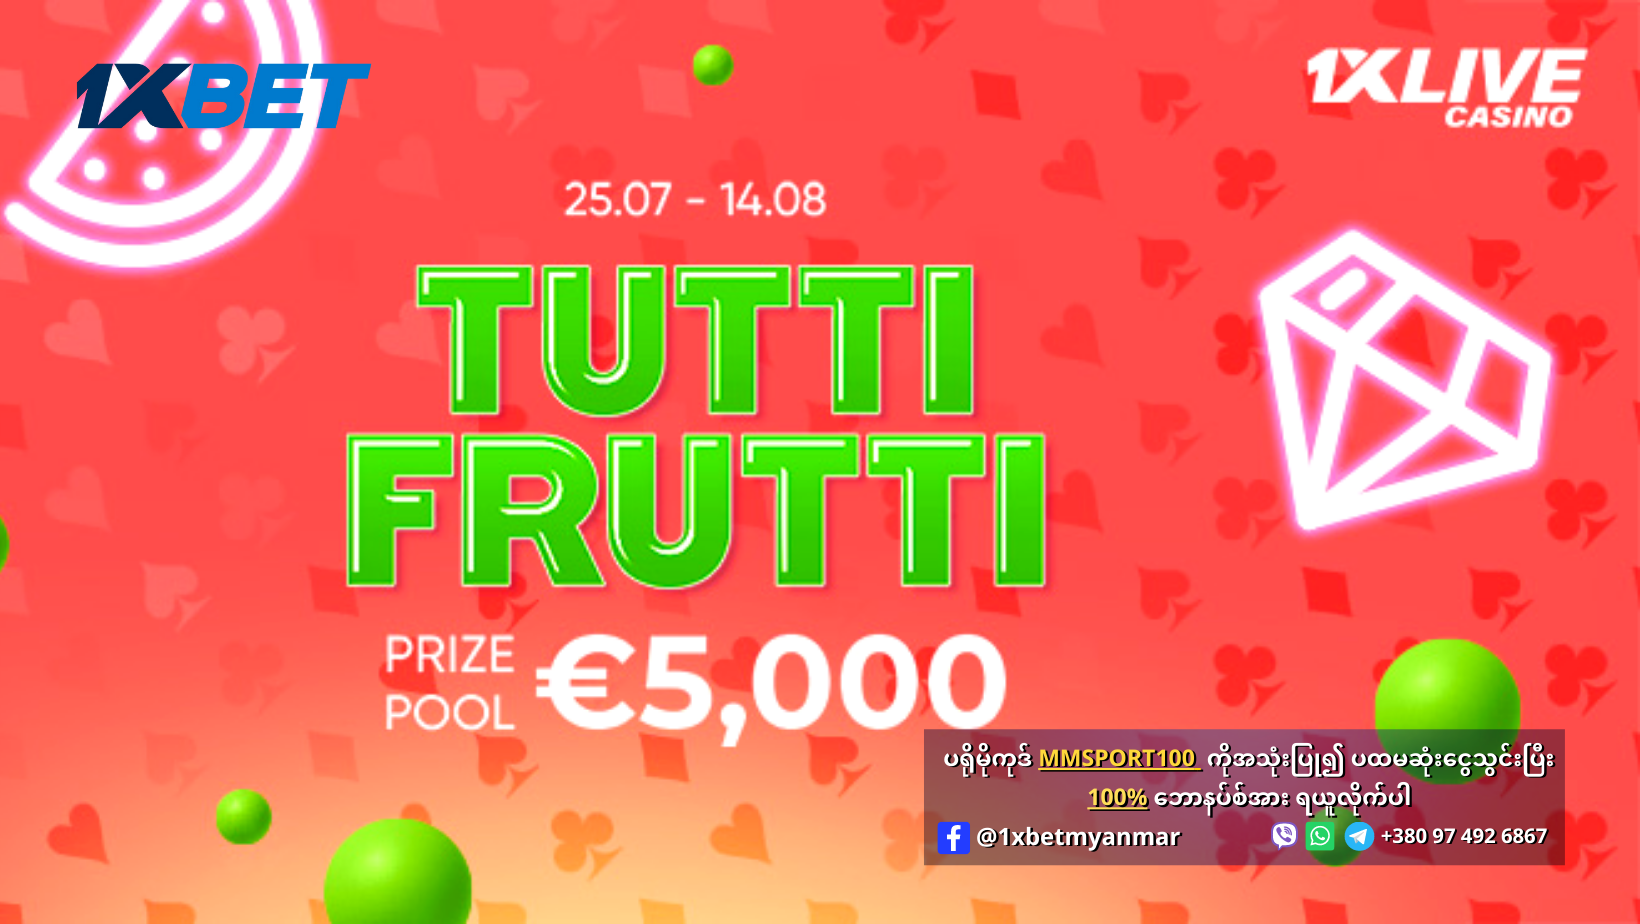 Turri Frutti Promotion